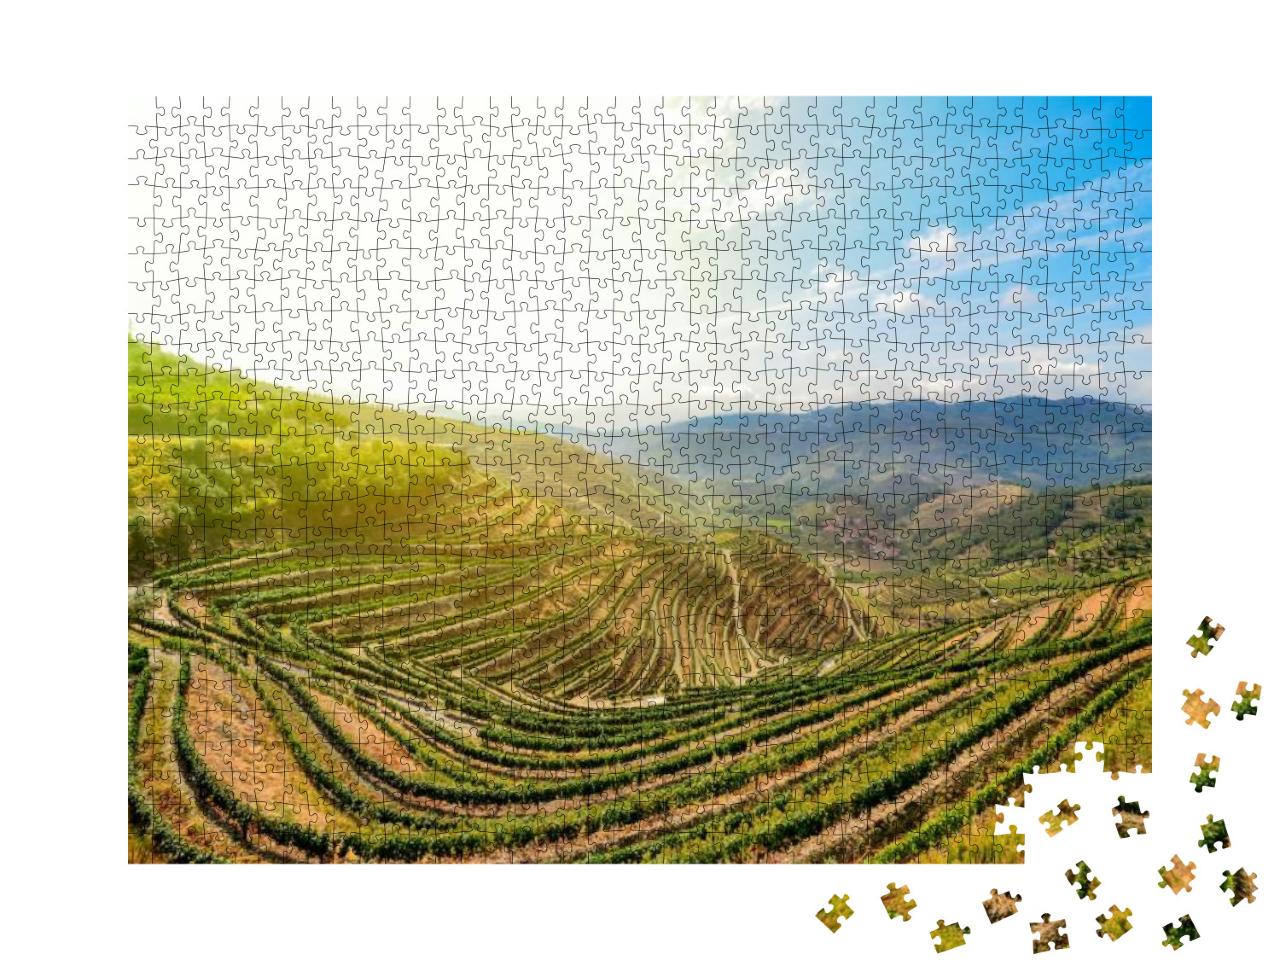 Puzzle 1000 Teile „Douro-Tal in der Weinregion Porto, Portugal“